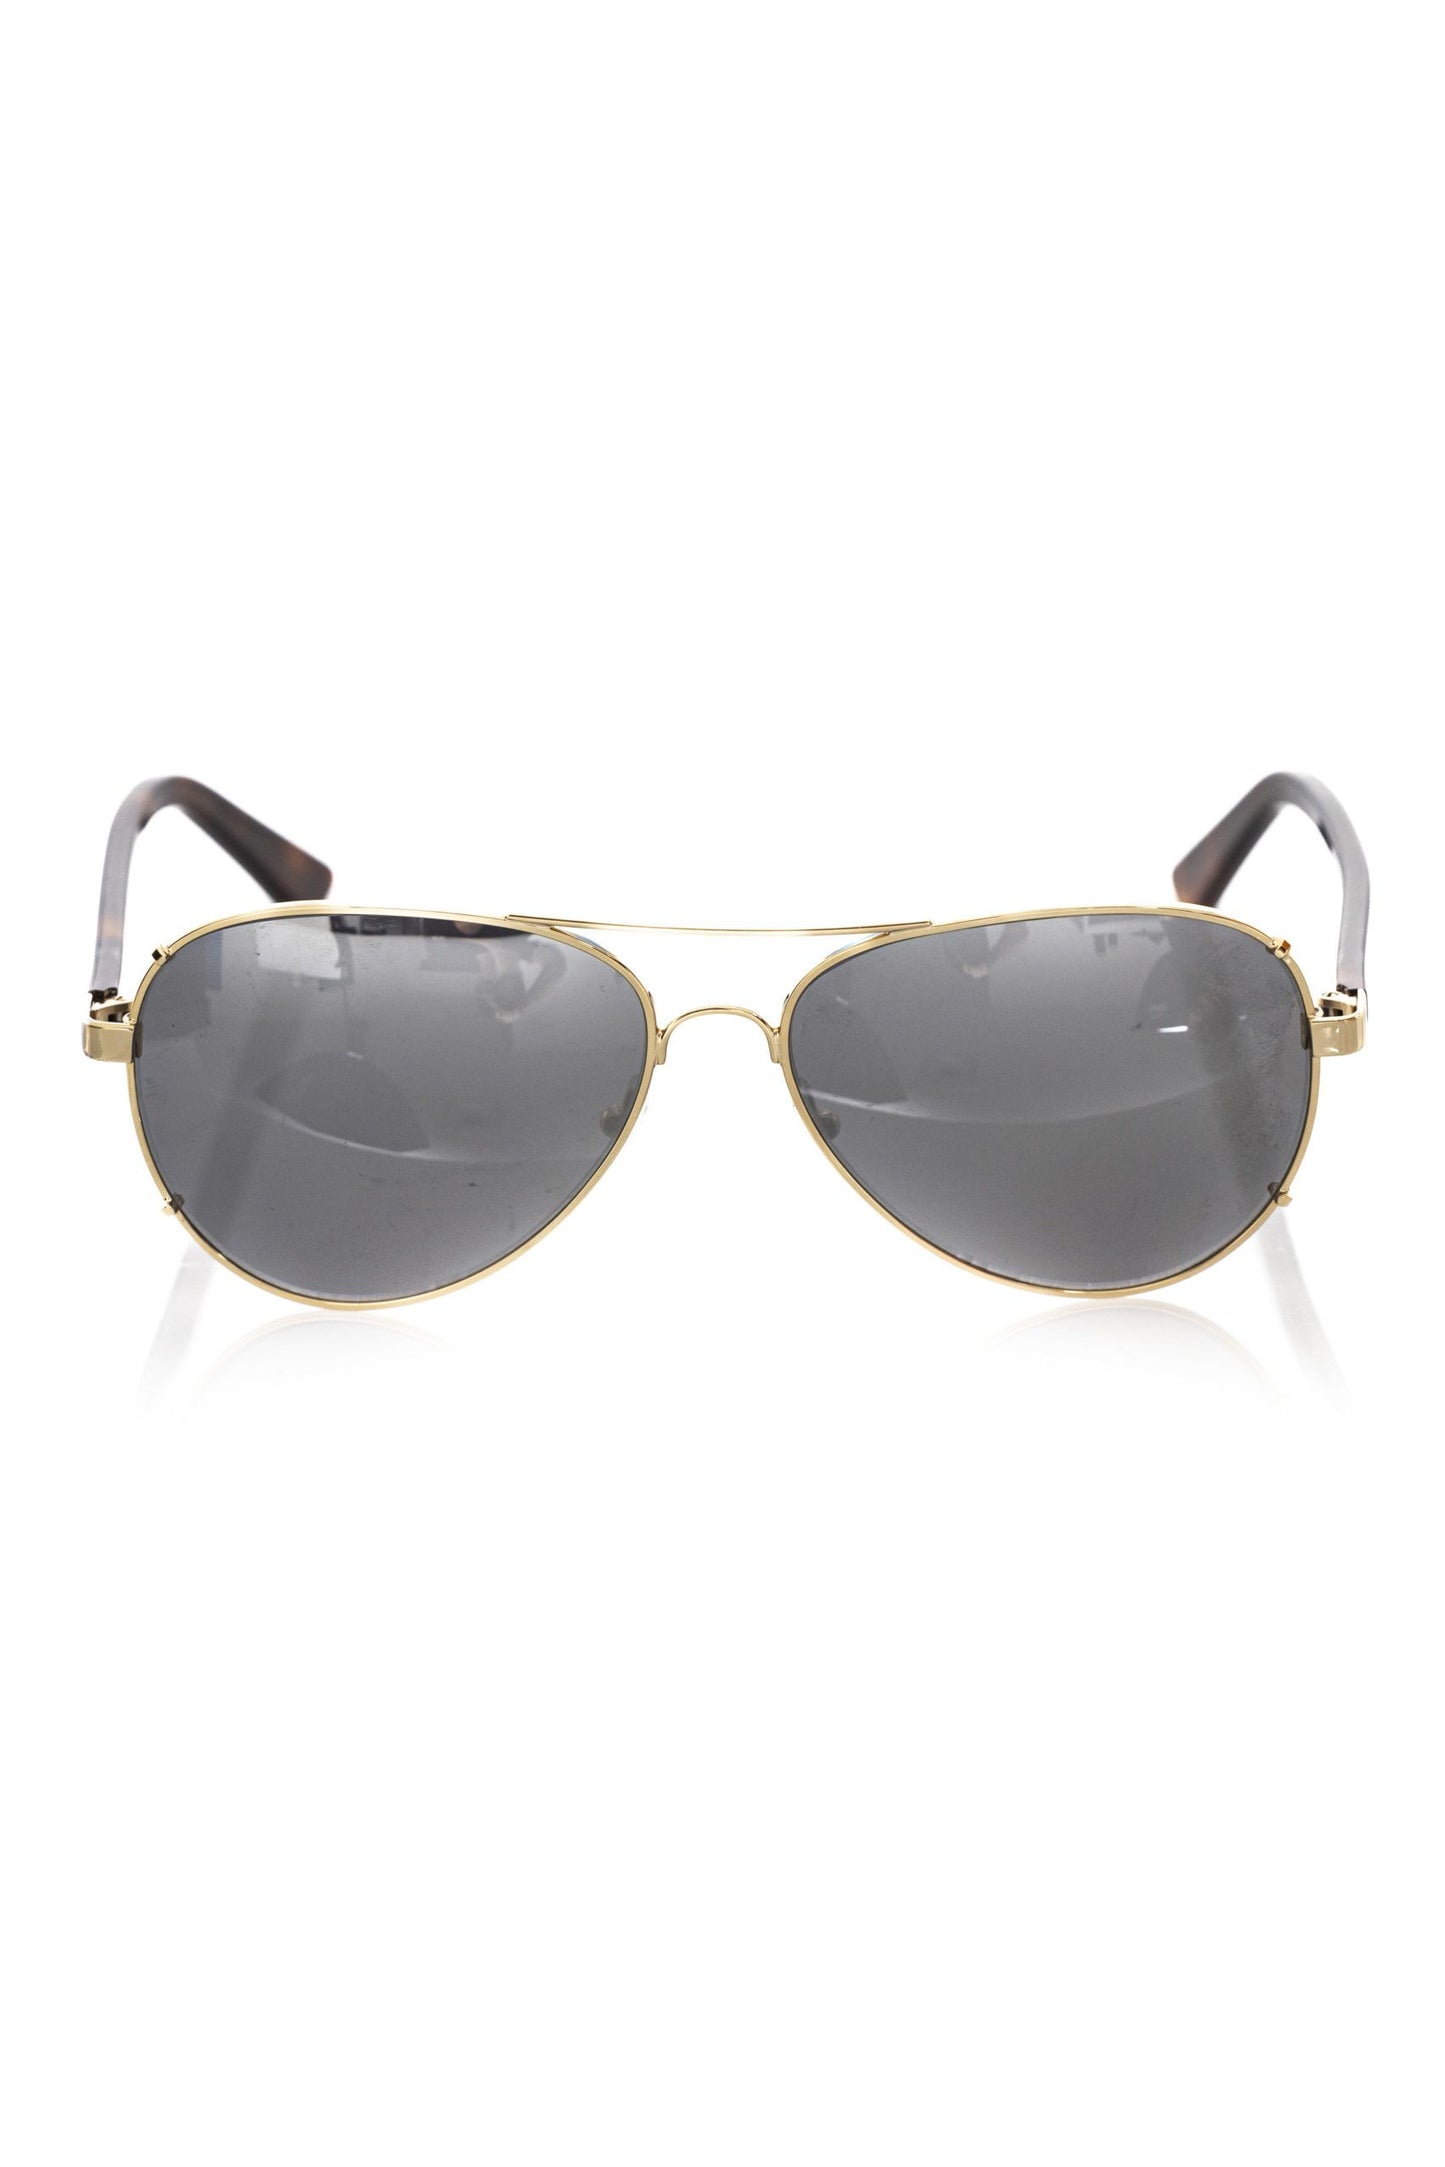 Frankie Morello Aviator Elegance Sunglasses in Gold